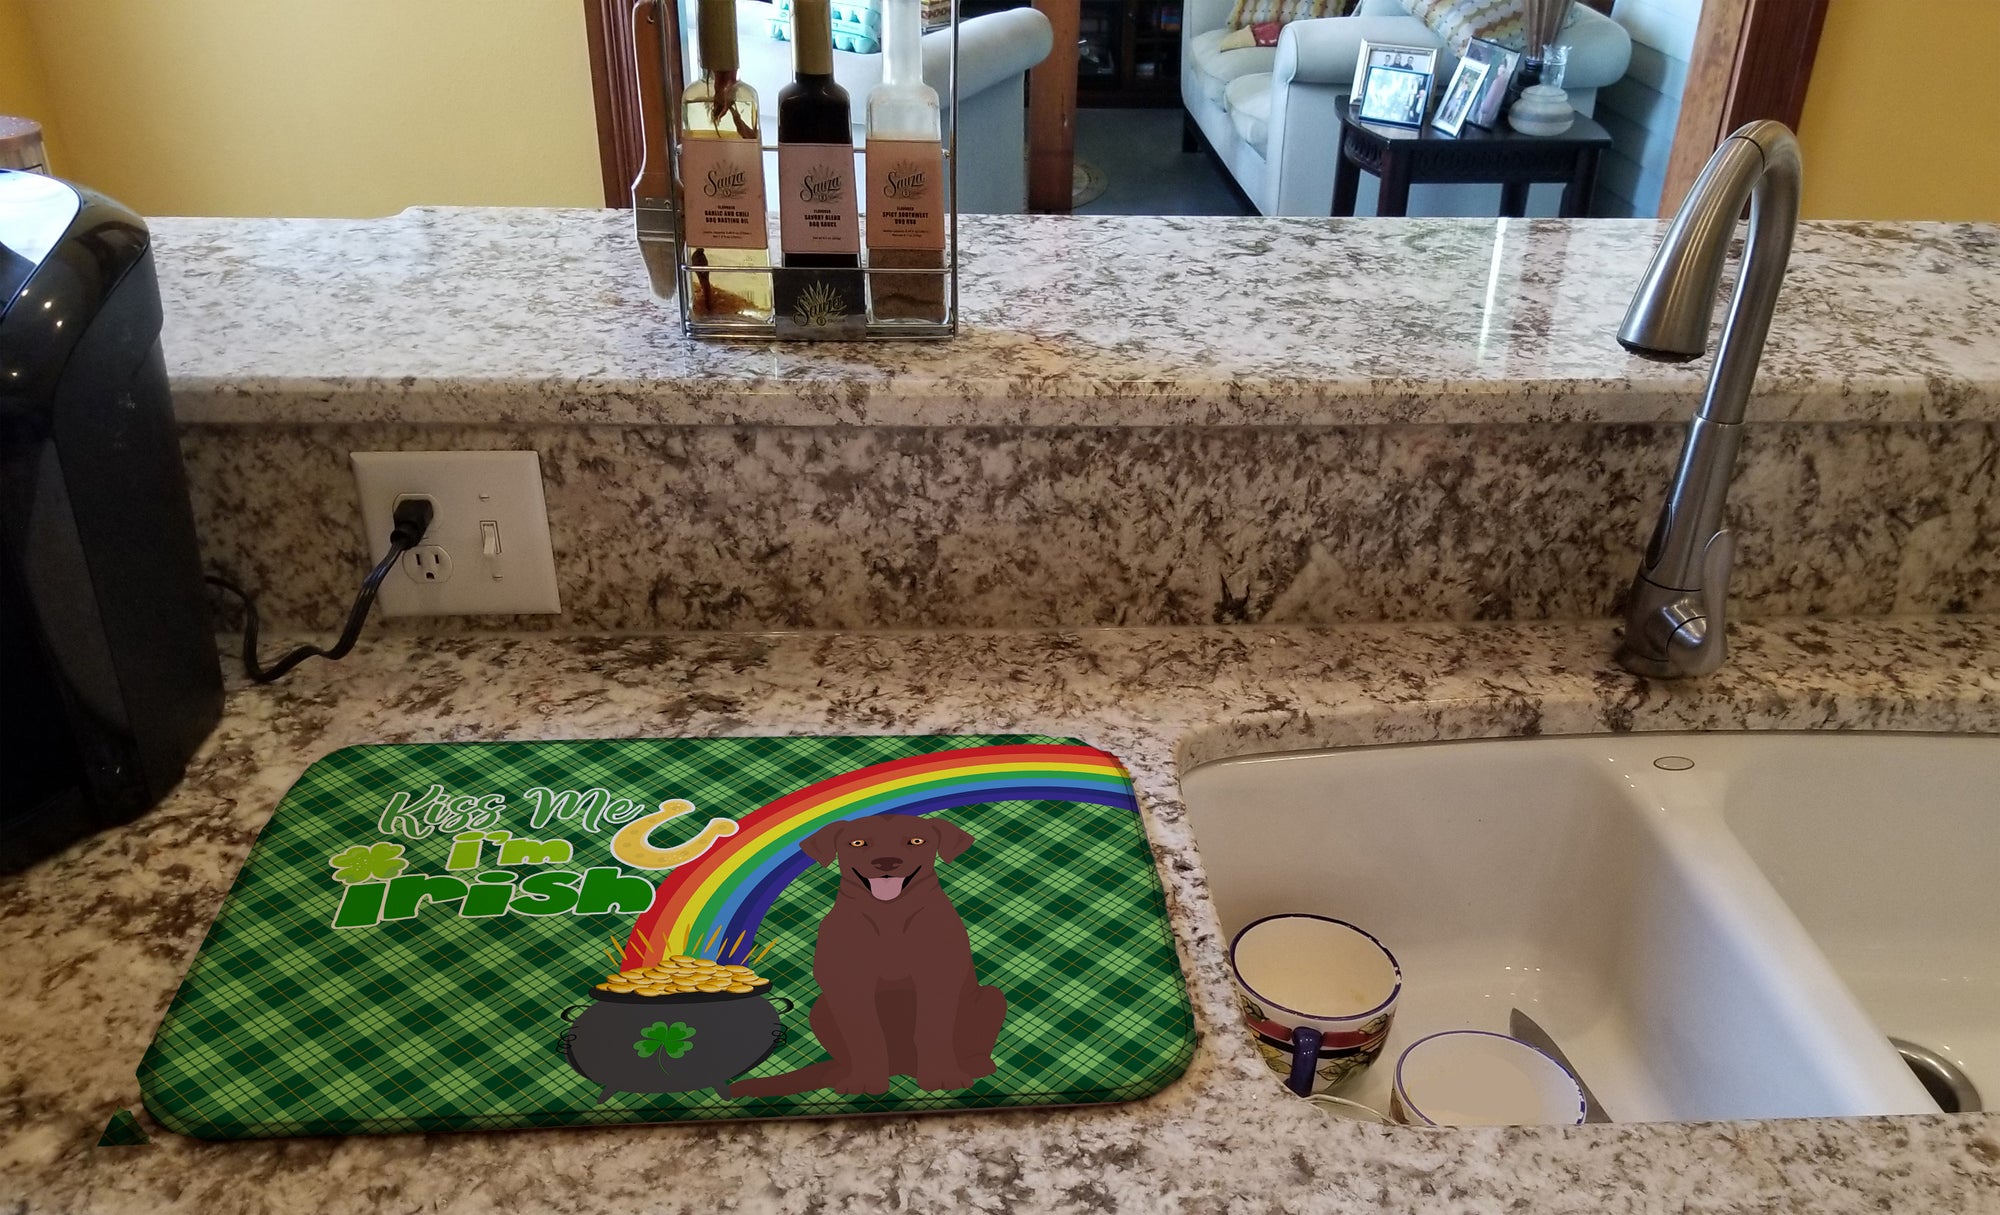 Chocolate Labrador Retriever St. Patrick's Day Dish Drying Mat